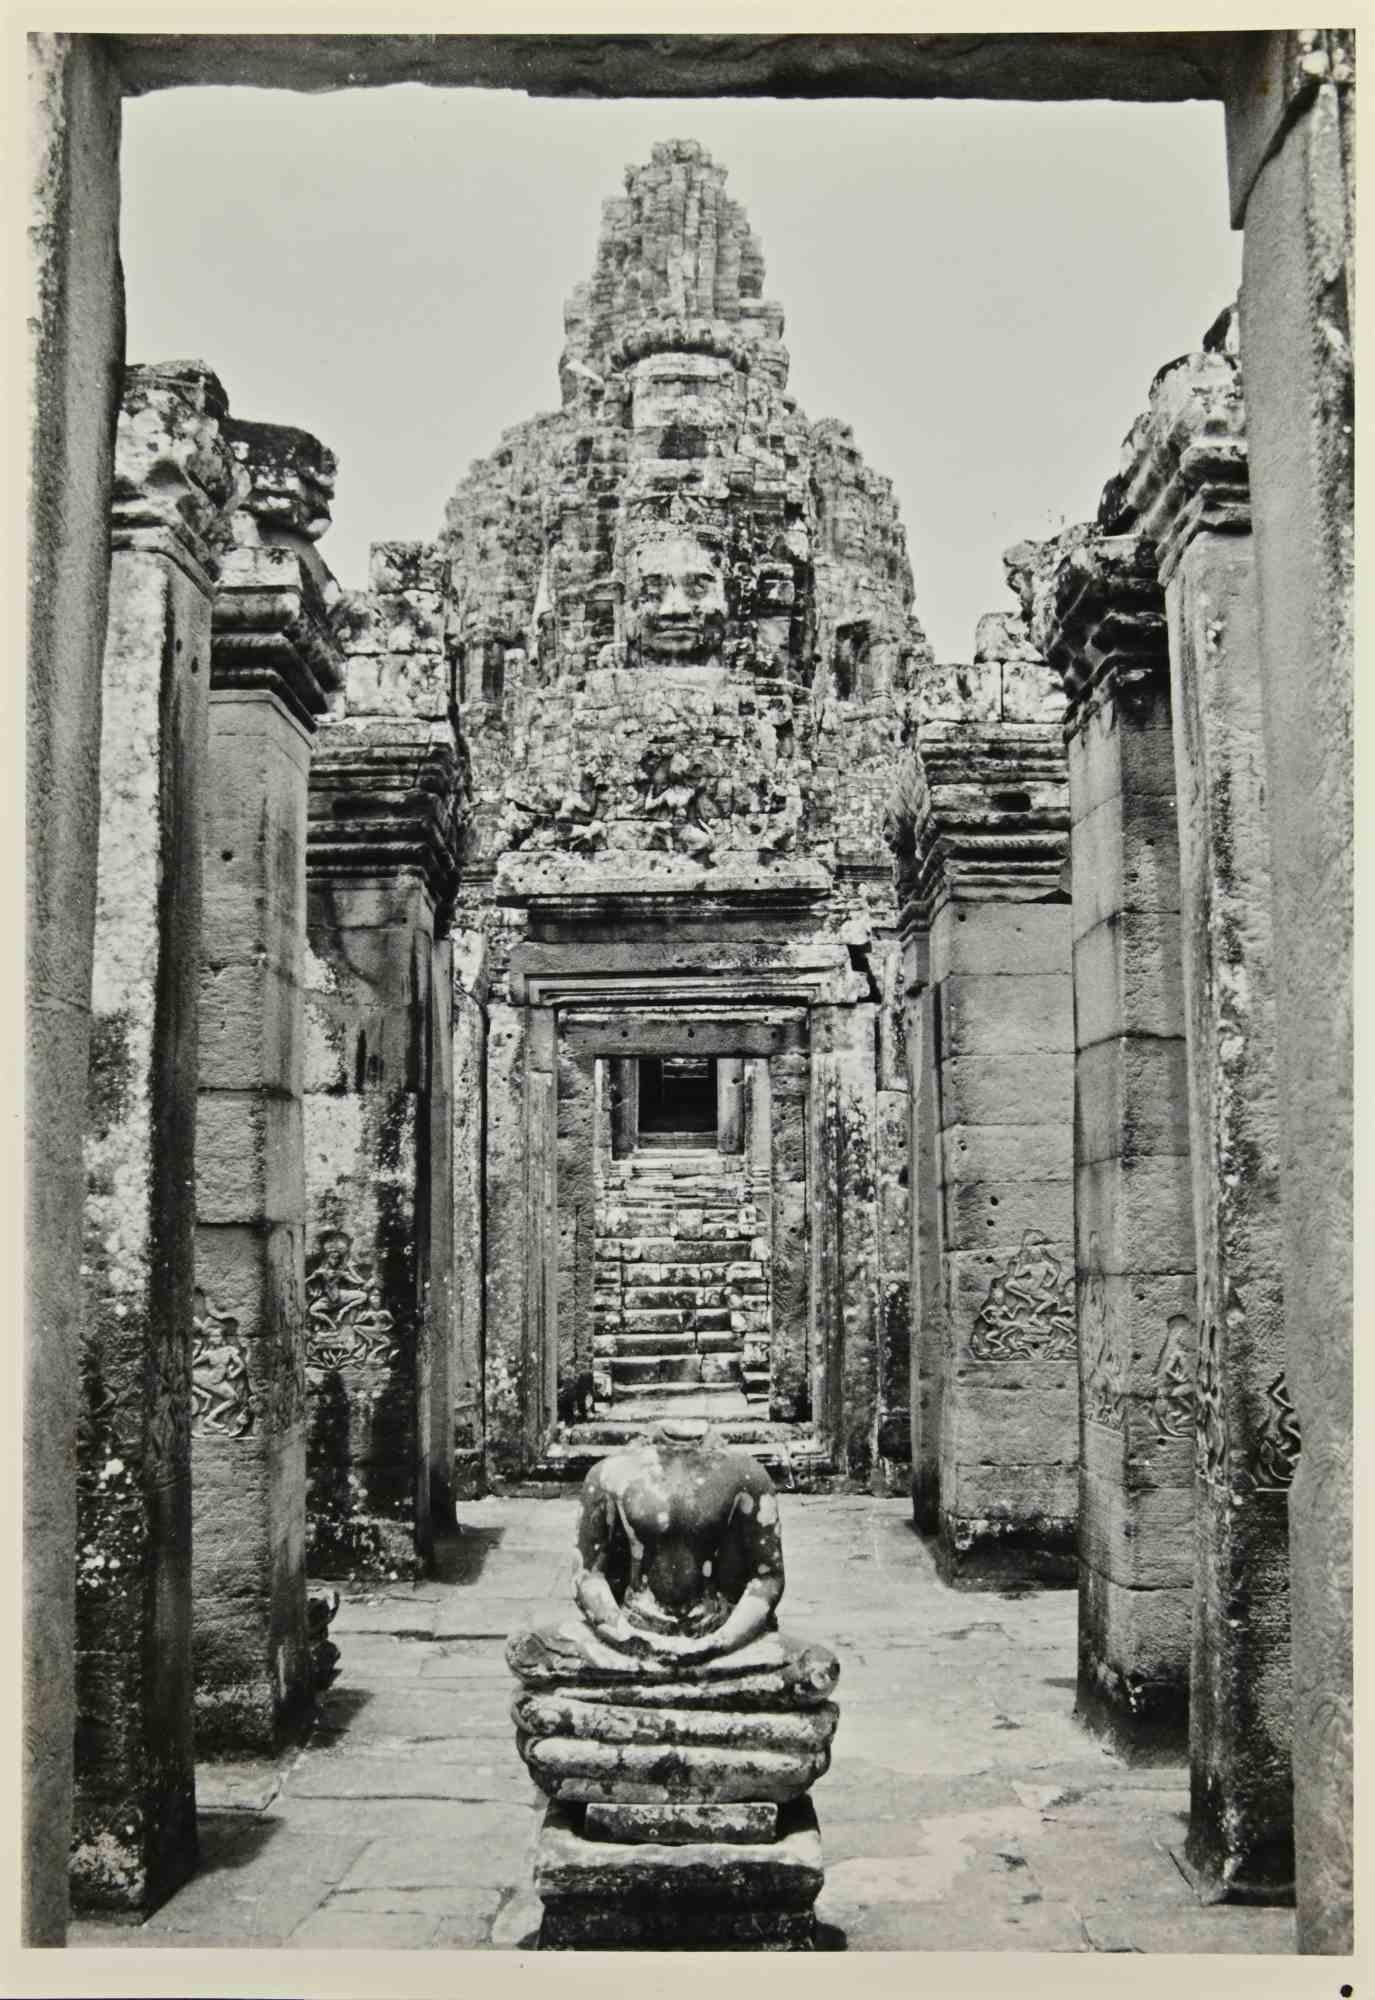 Unknown Landscape Photograph - Cambodia Temple - Vintage Photograph - 1960s